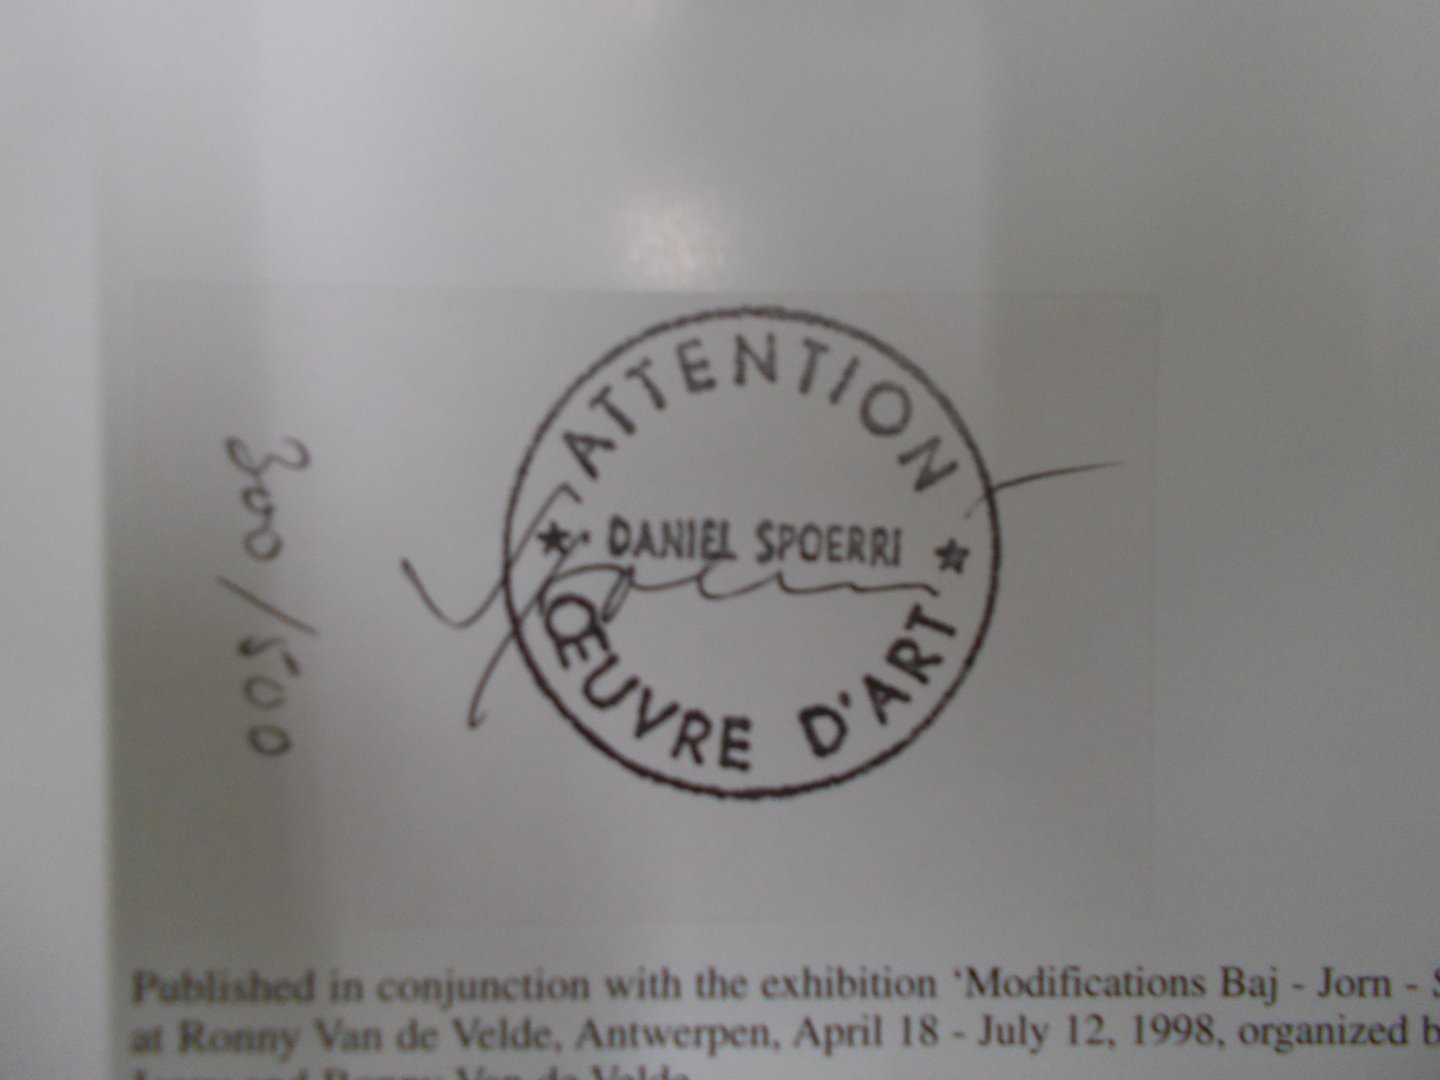  - Daniel Spoerri. Modifications. Detrompe-L'oeil. Signed and nummered copy.